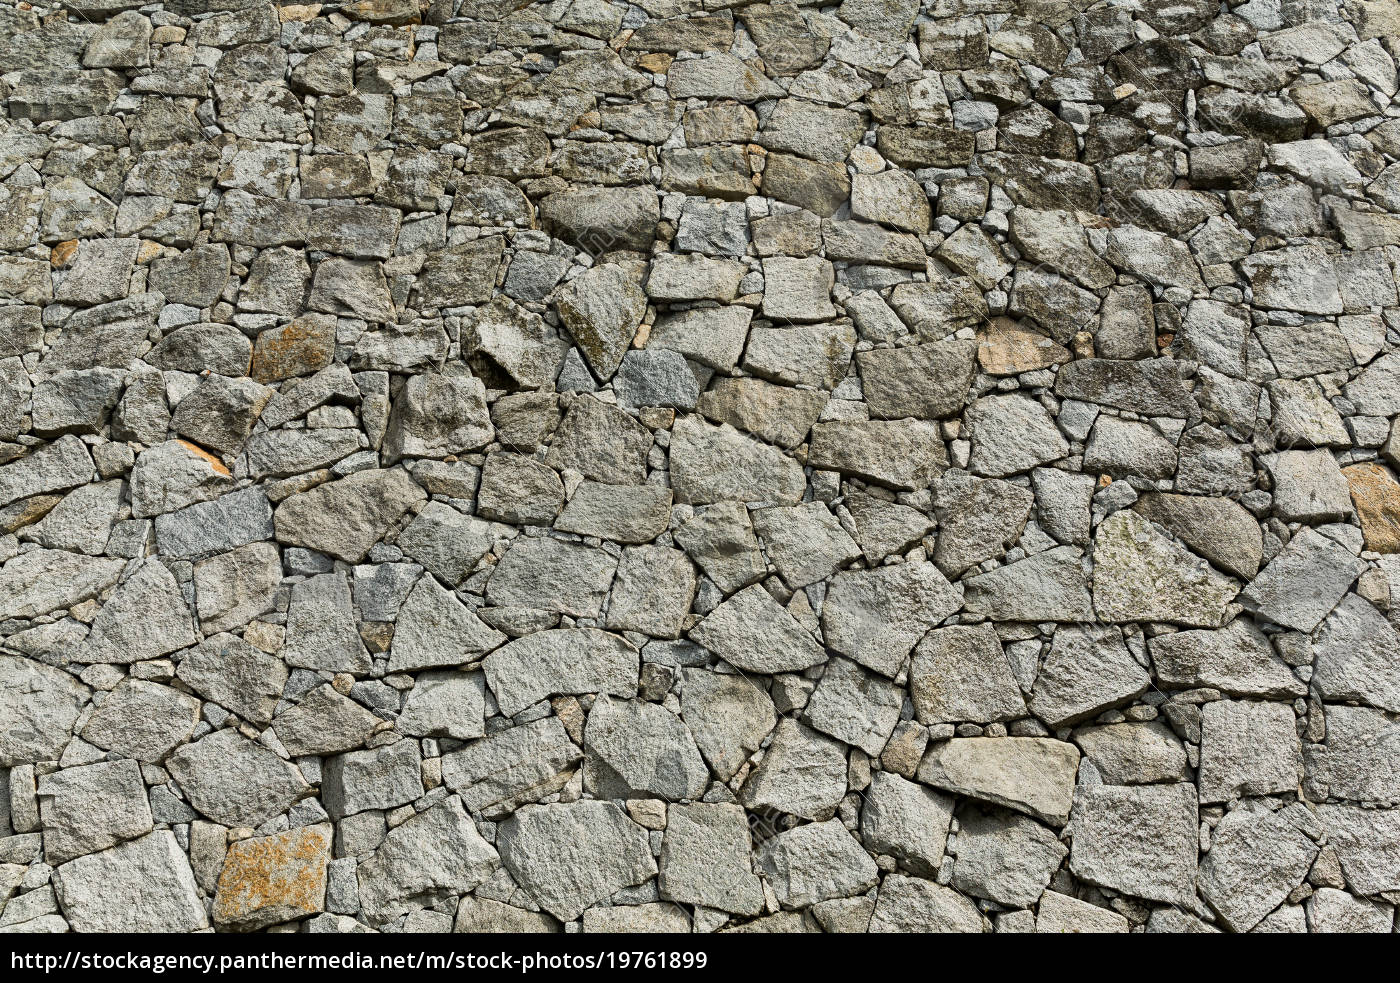 Tela De Textura Antiga Da Parede De Pedra Foto de Stock - Imagem de  textura, bloco: 166324170